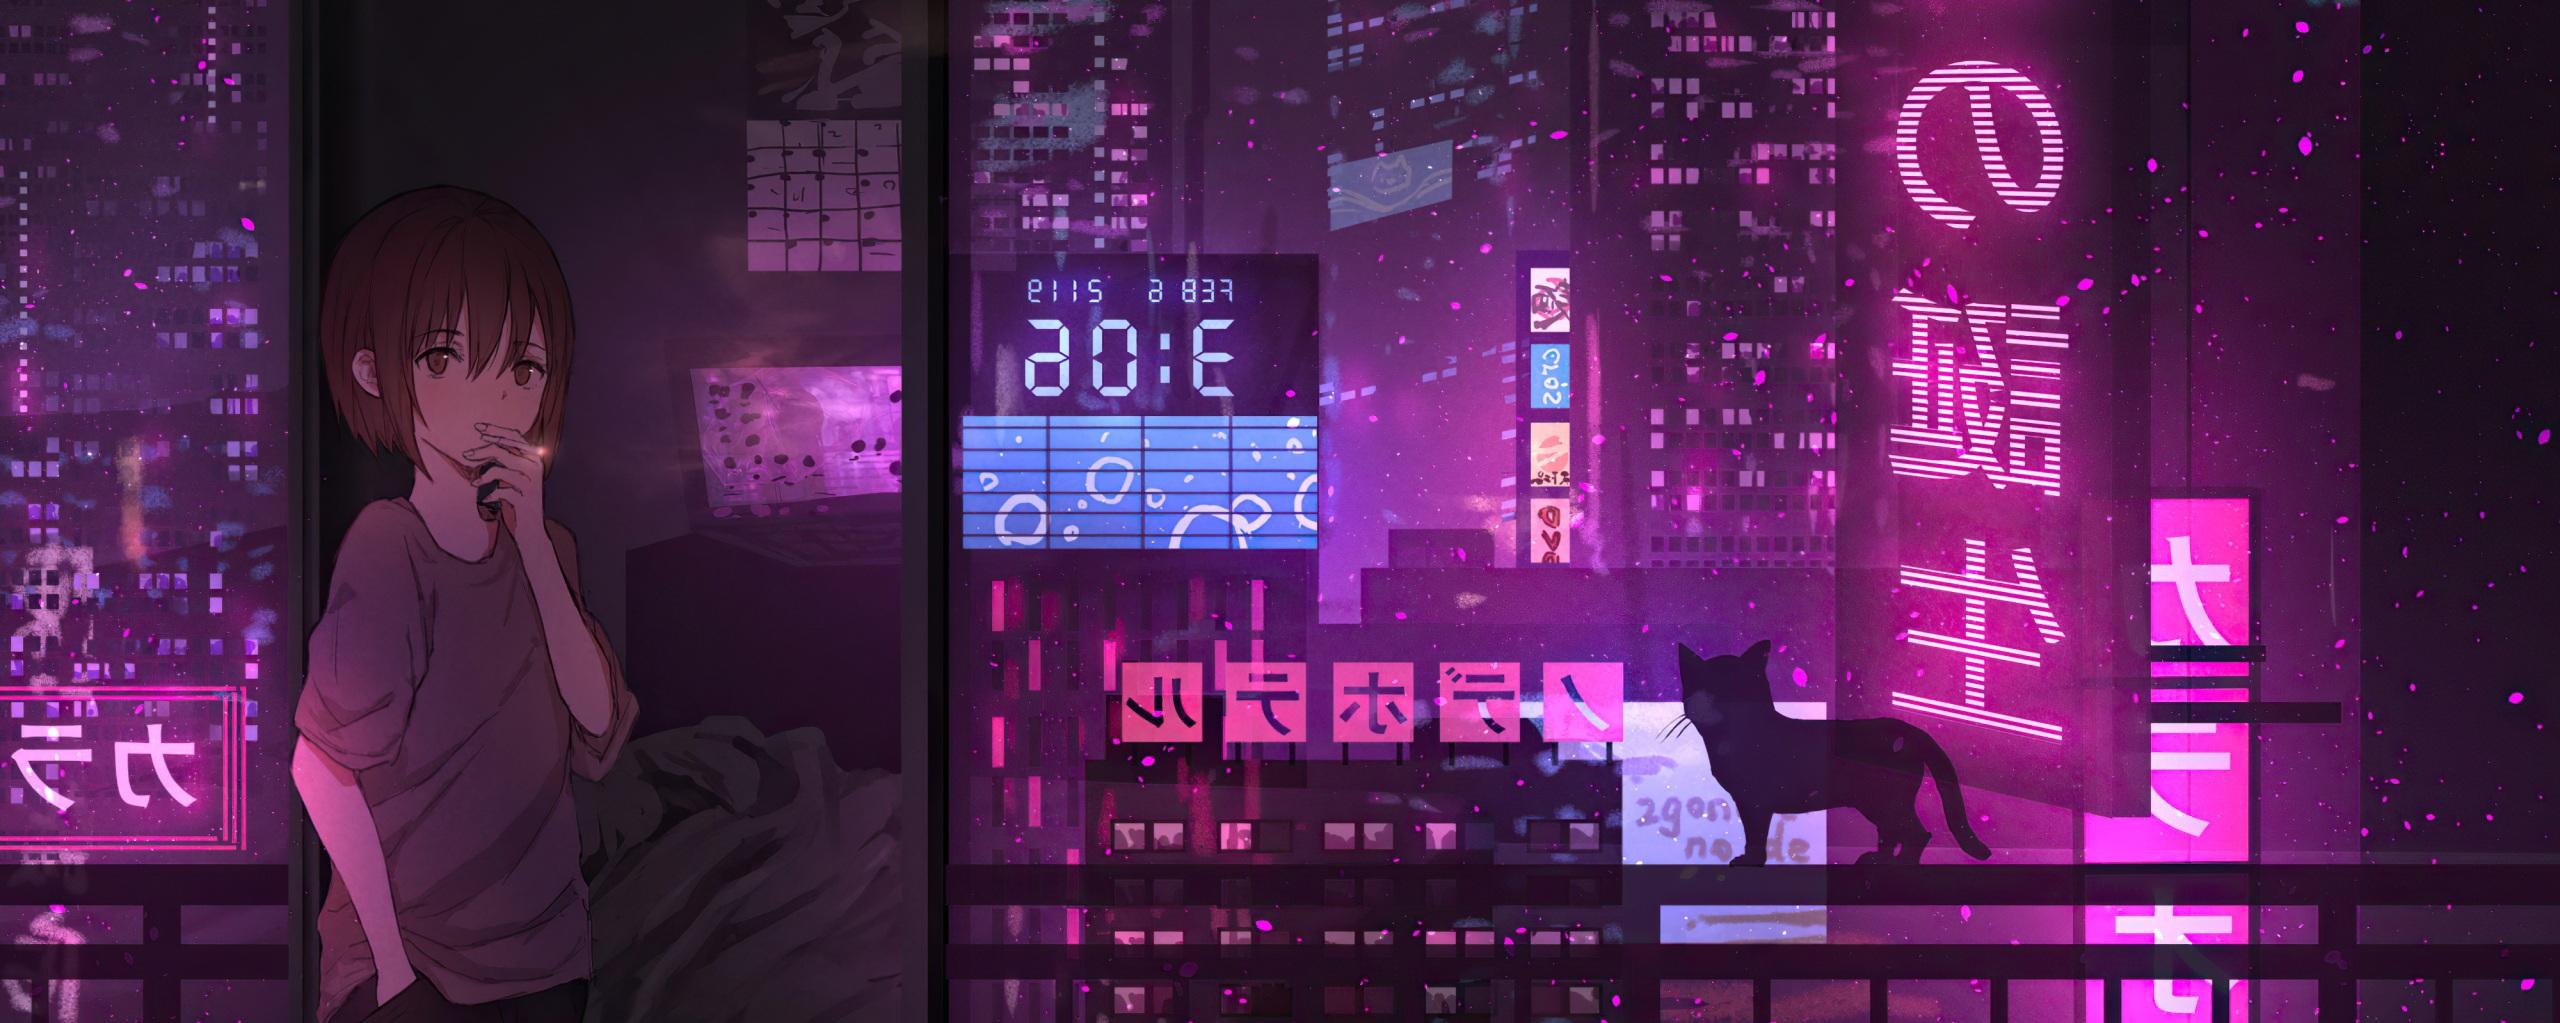 Wallpaper 4k Anime Girl City Night Neon Cyberpunk